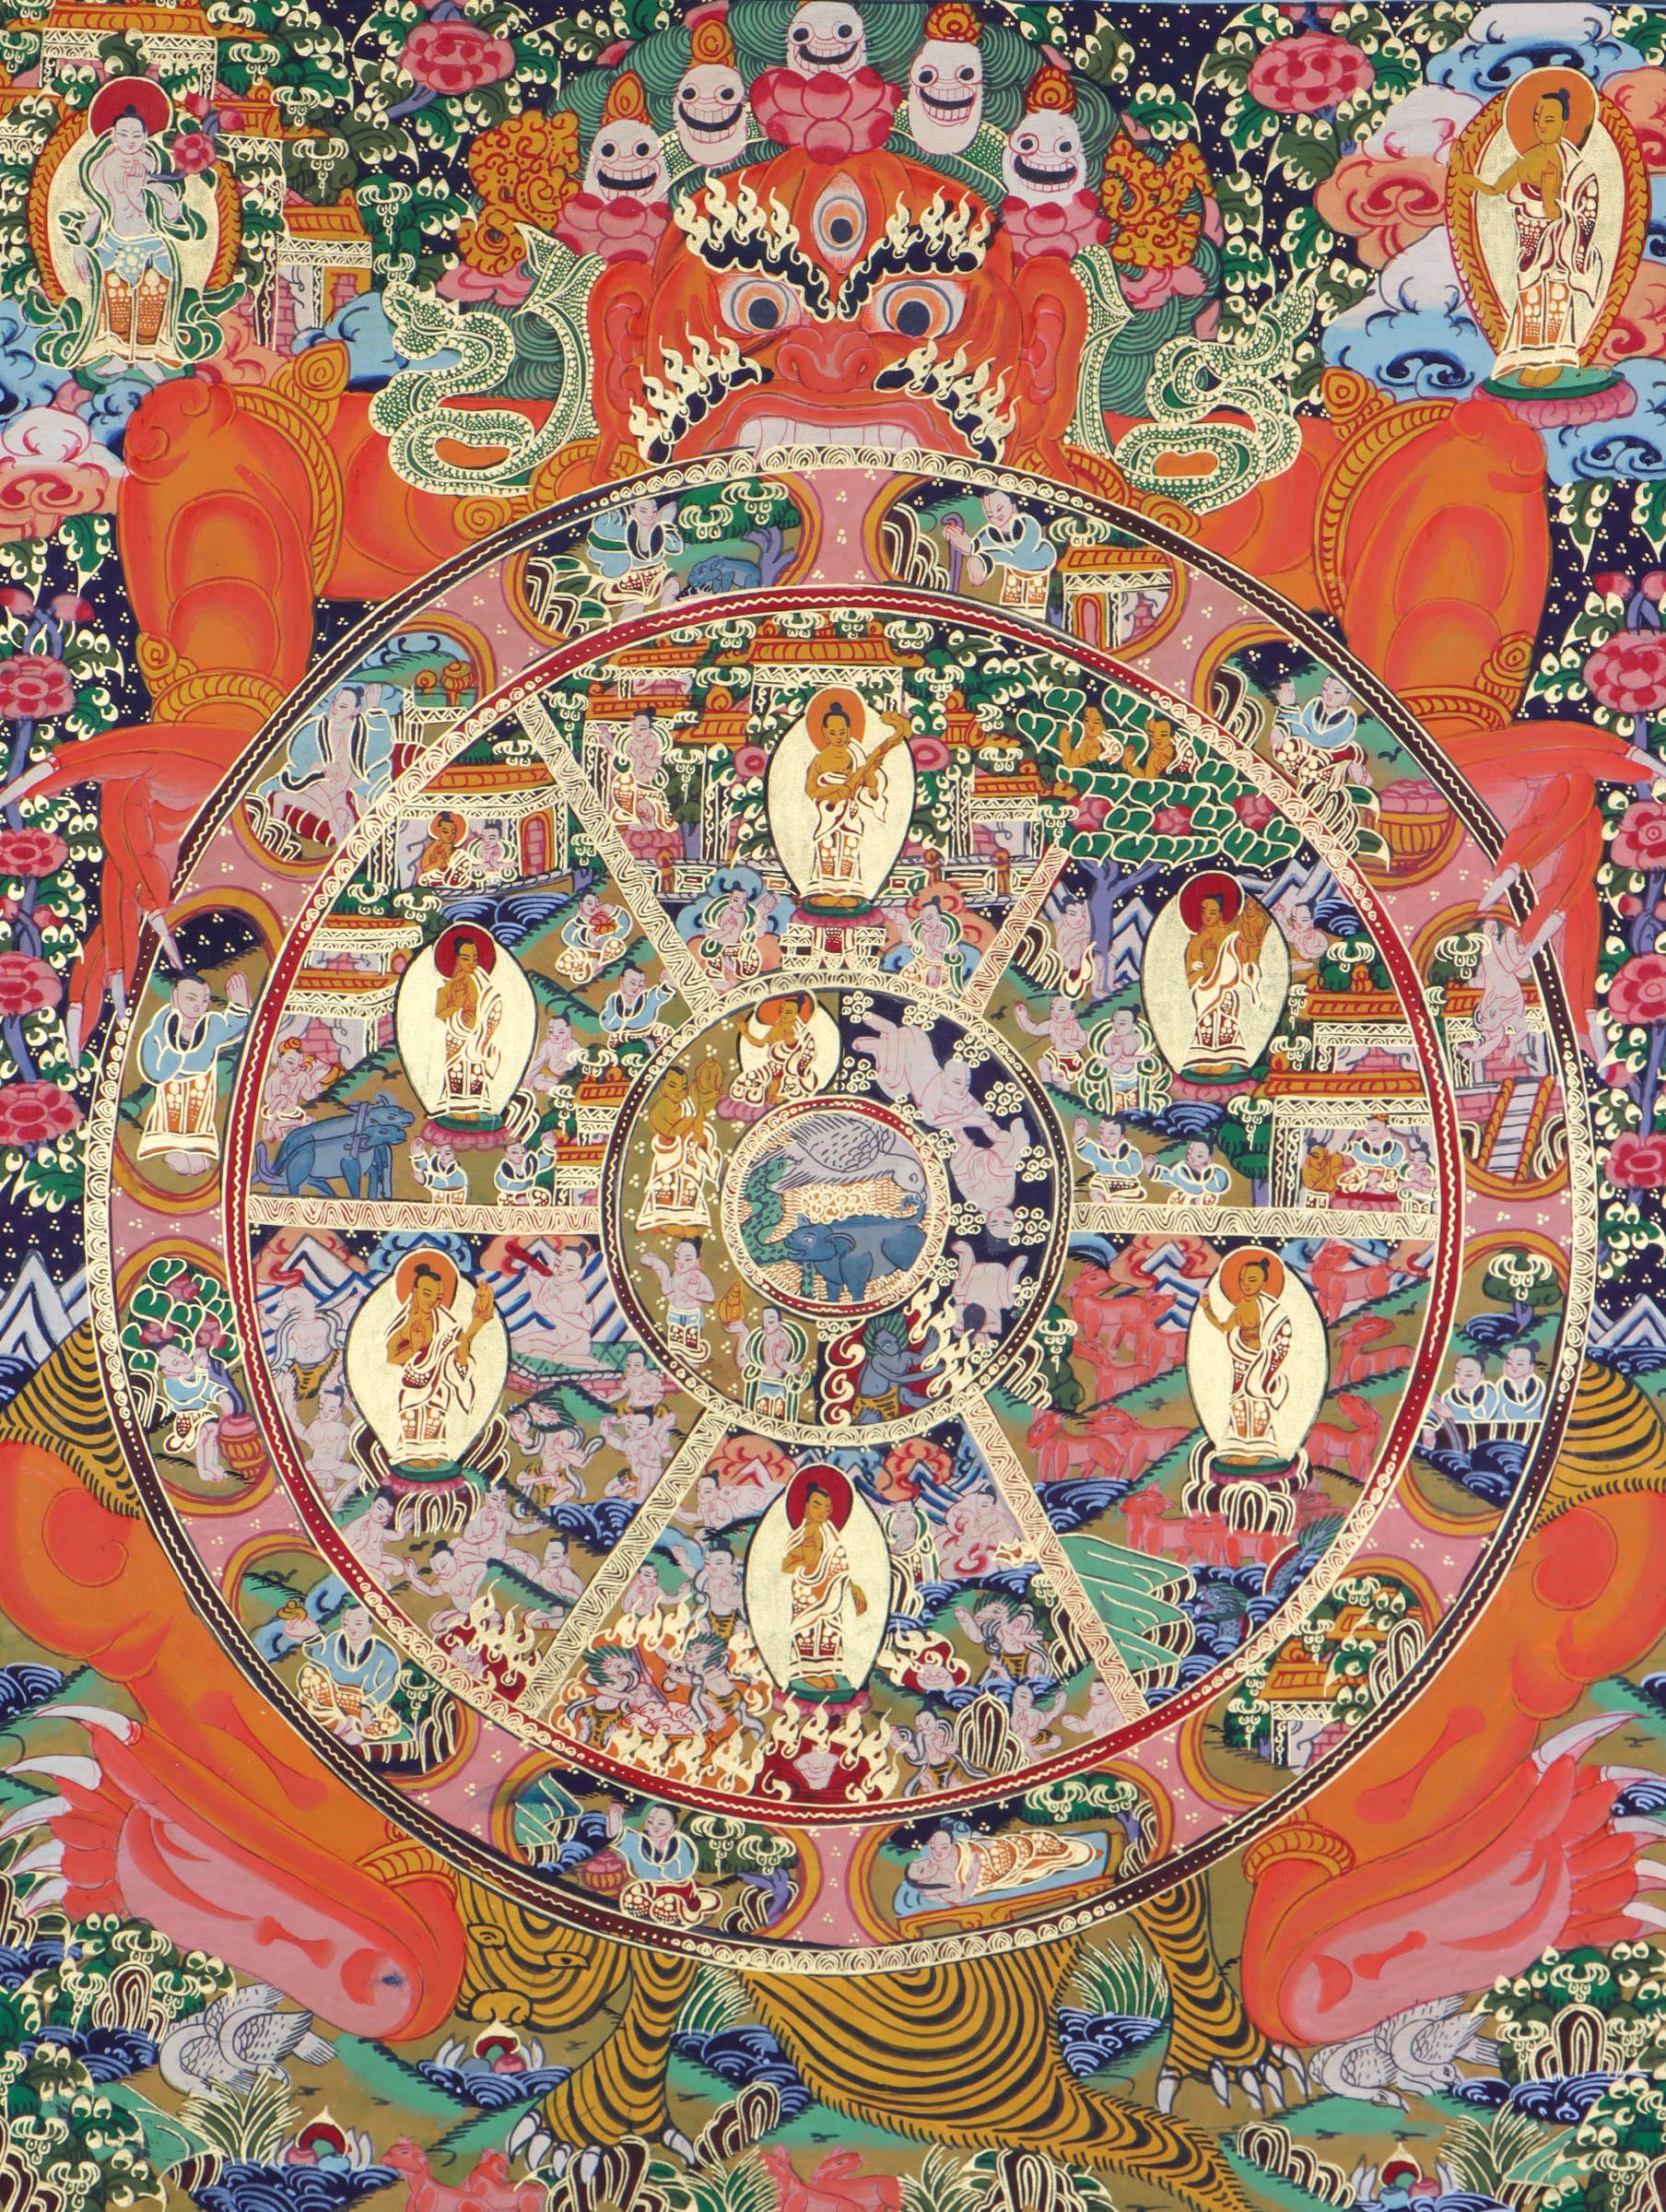 Wheel of life Thangka Painting - Buddhism Art of Spirituality and life existence